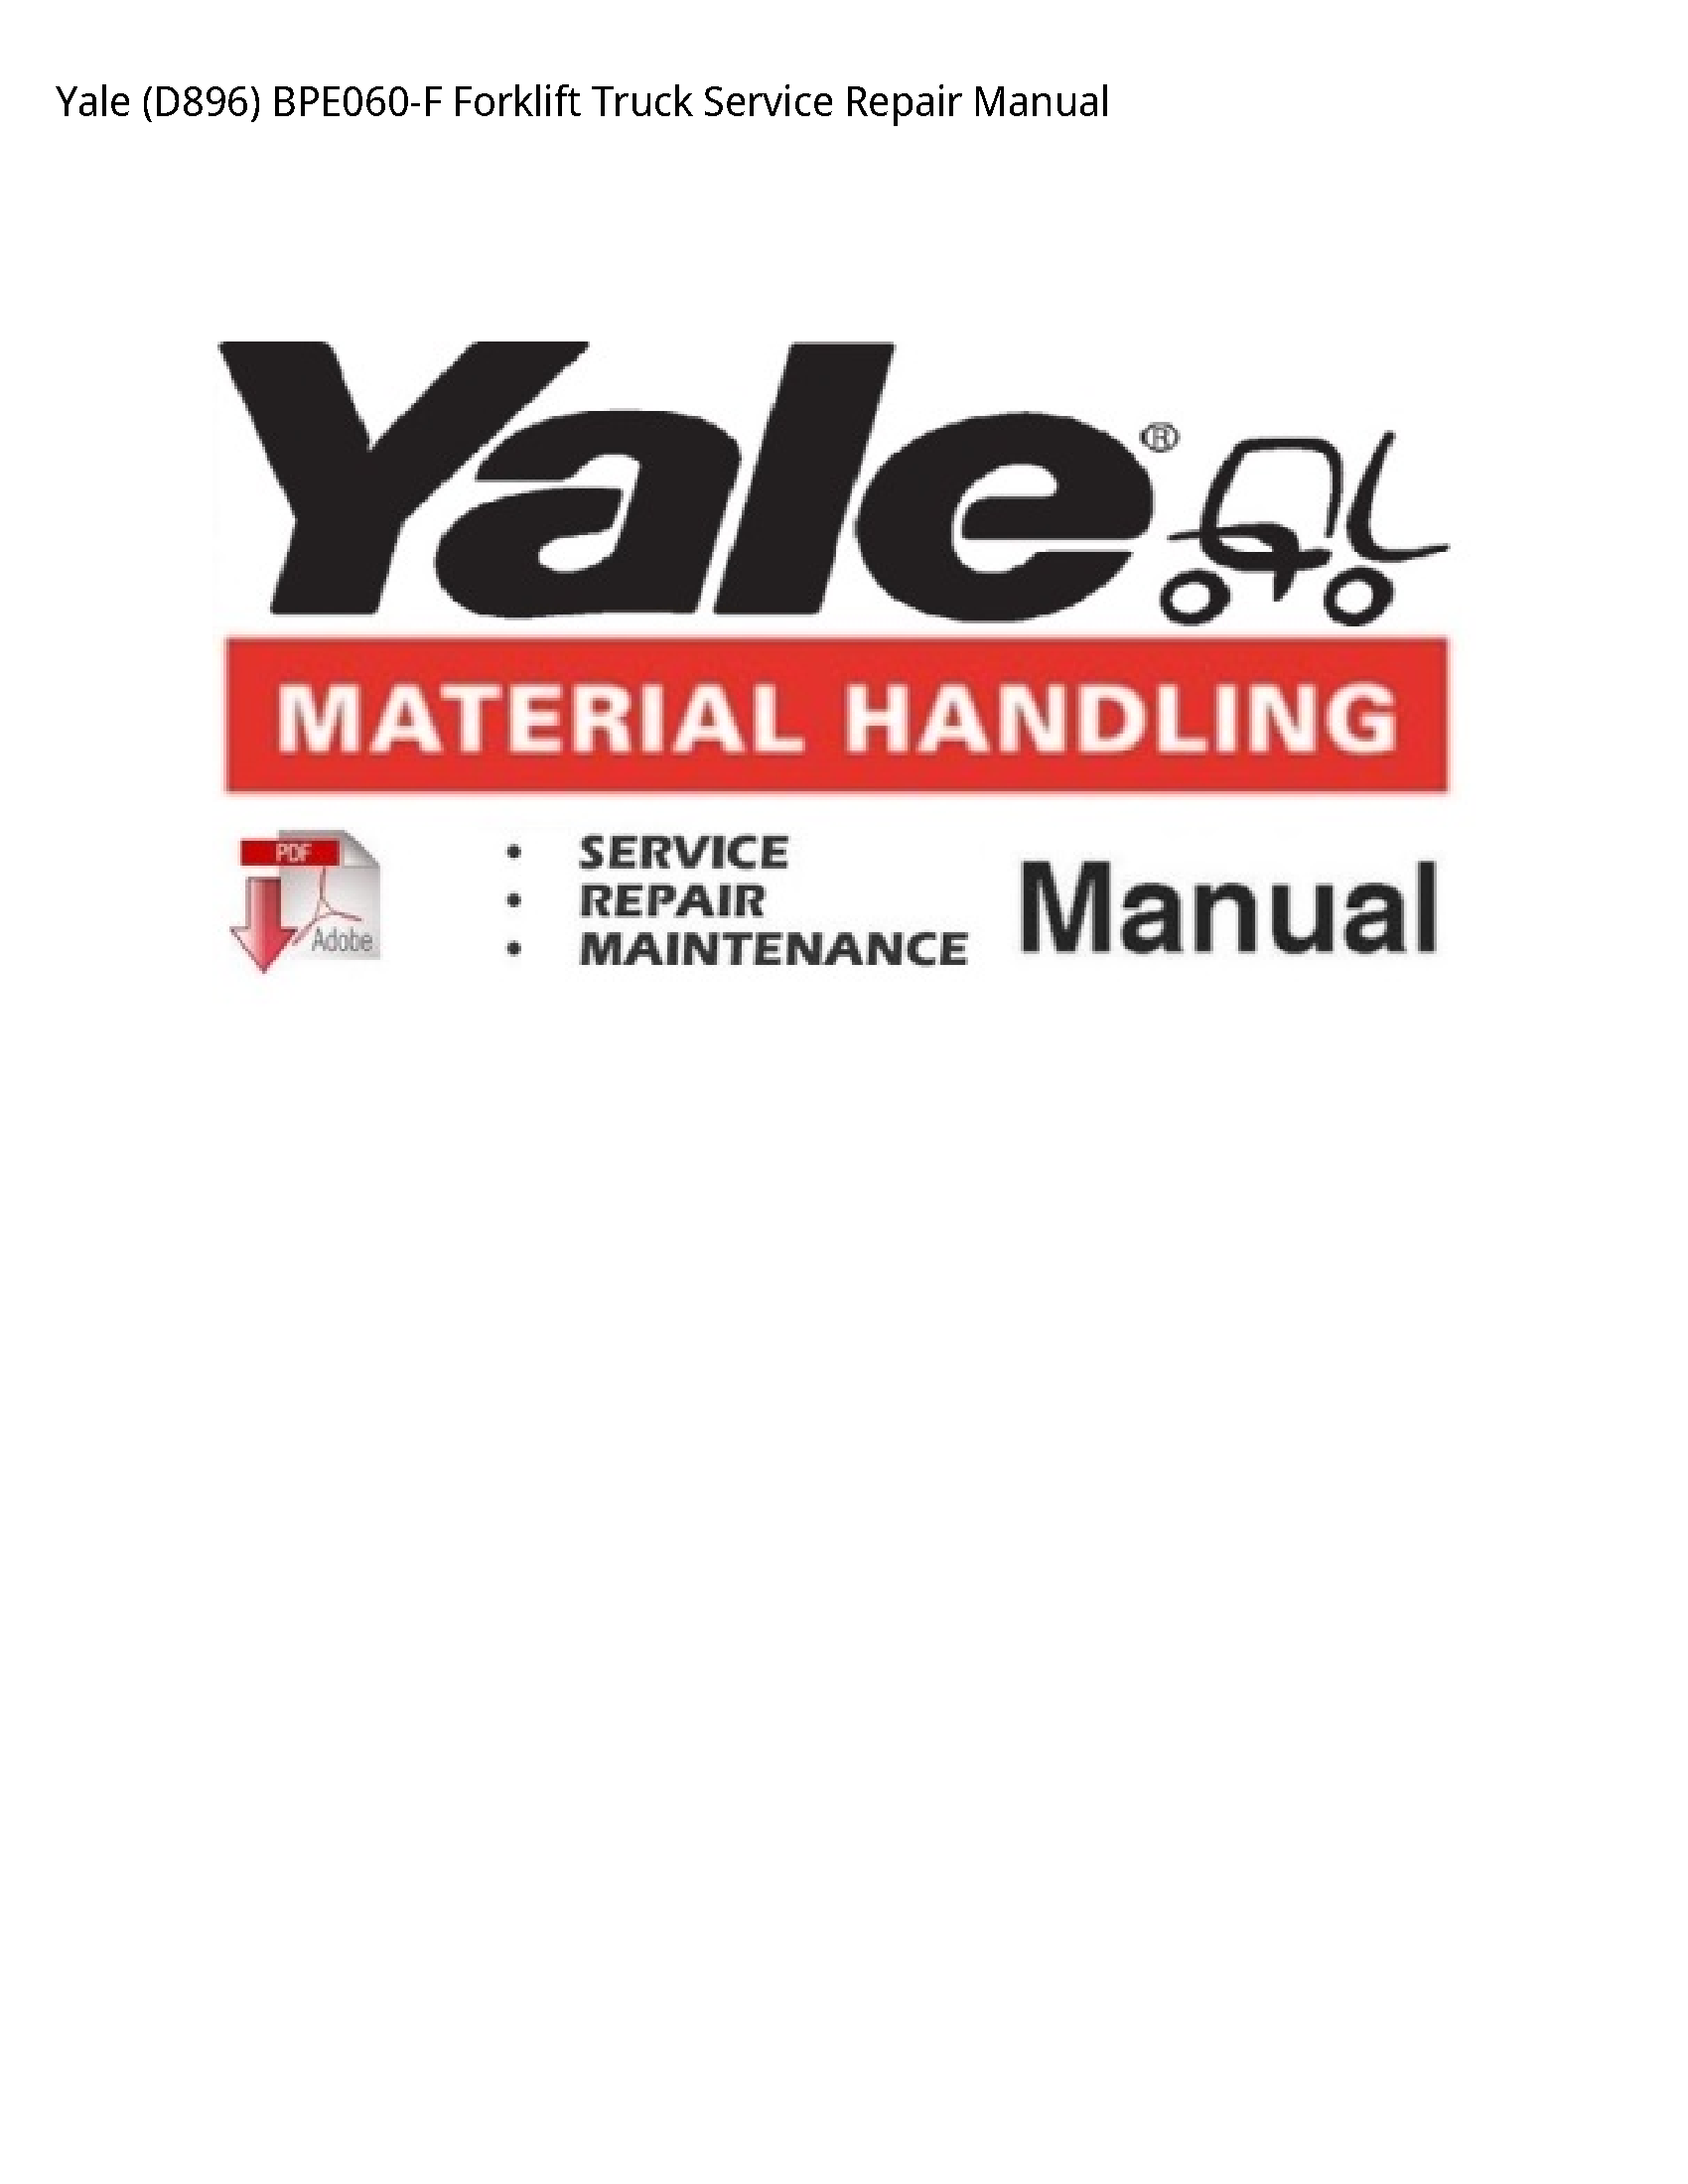 Yale (D896) Forklift Truck manual